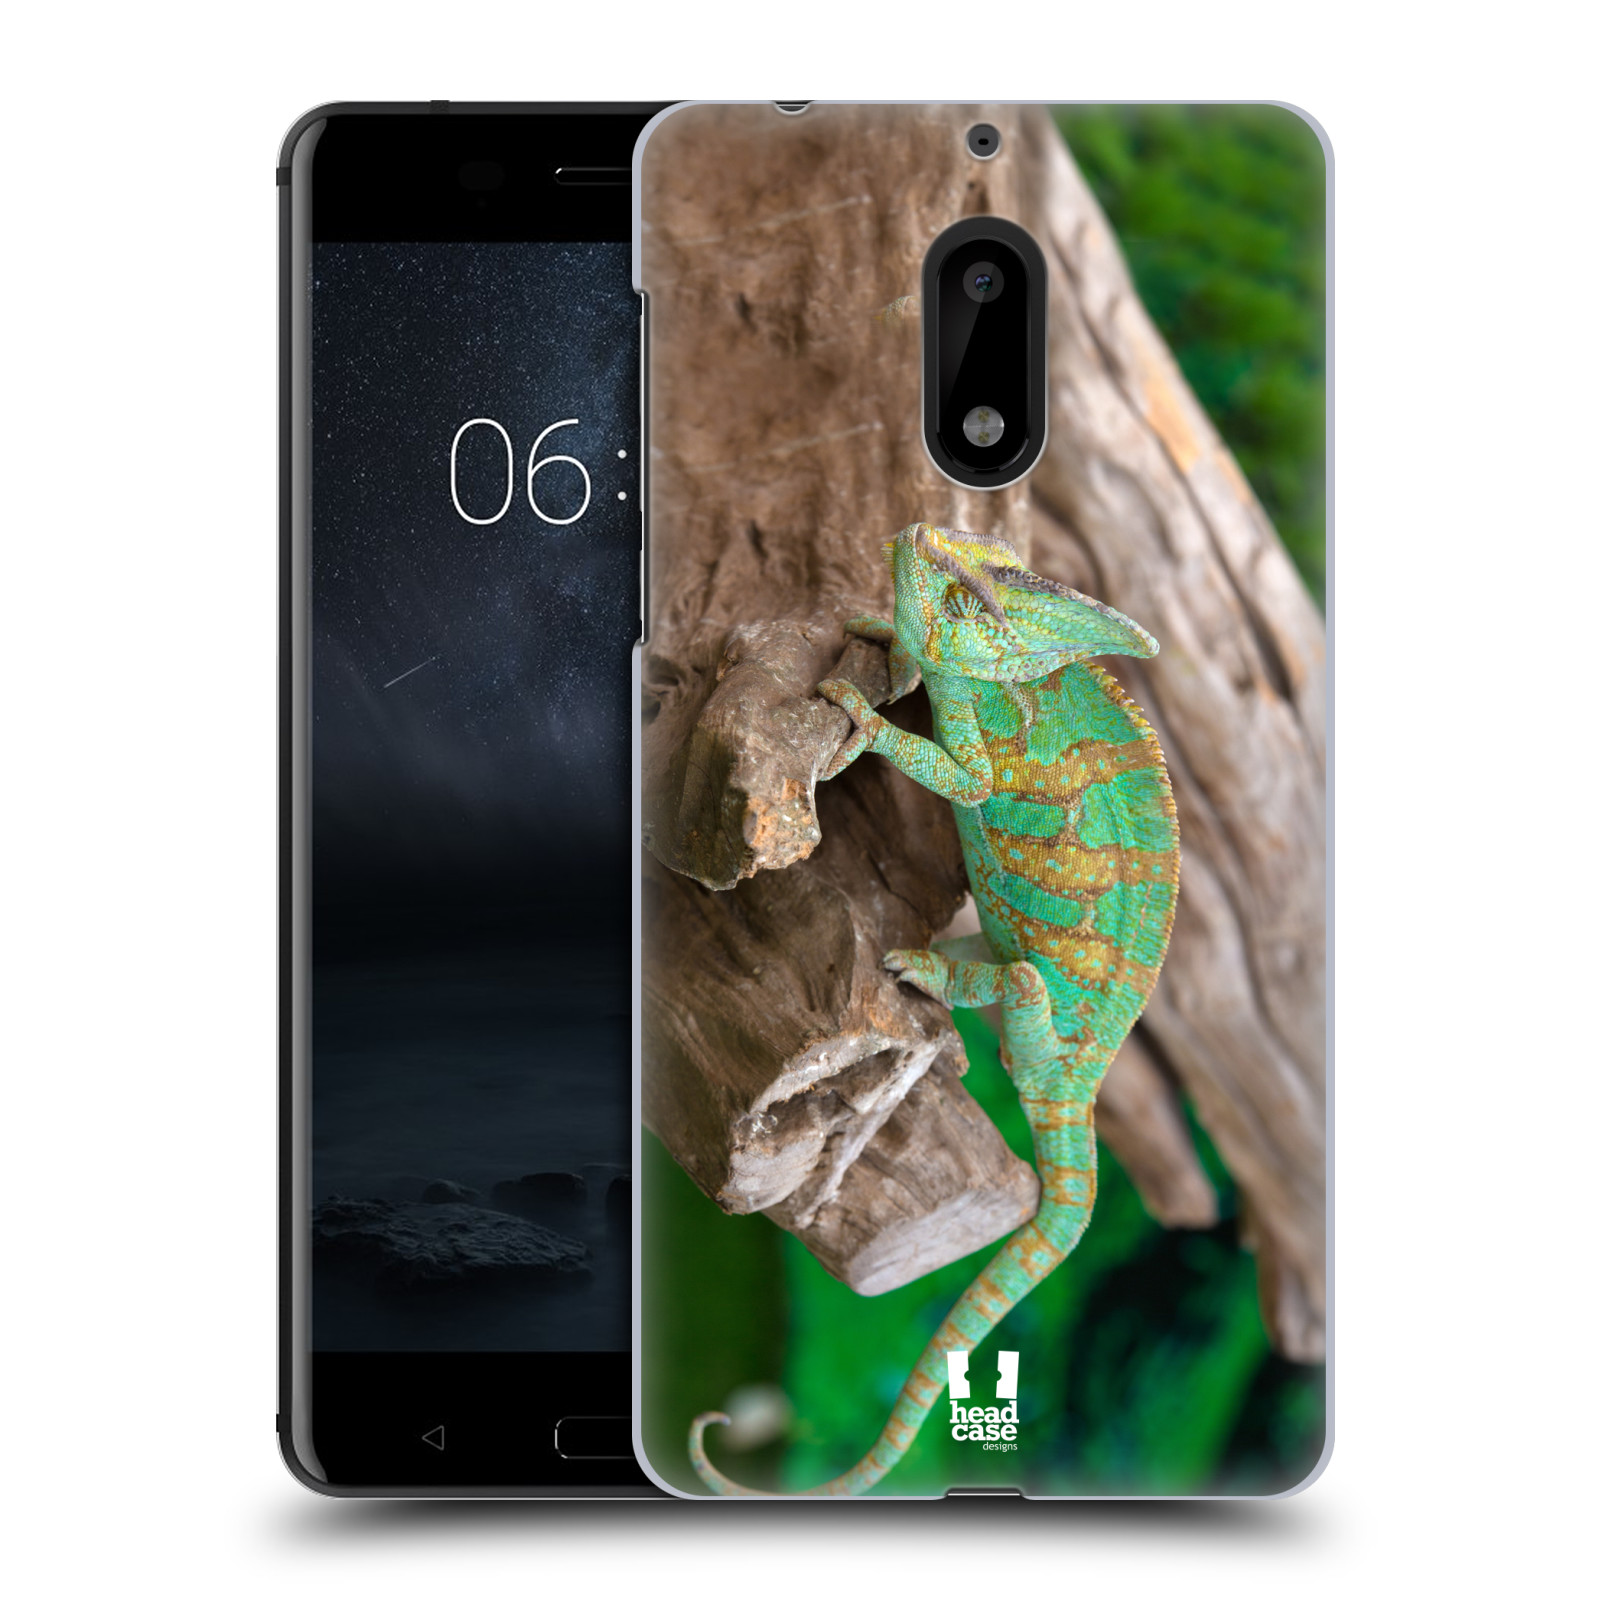 HEAD CASE plastový obal na mobil Nokia 6 vzor slavná zvířata foto chameleon